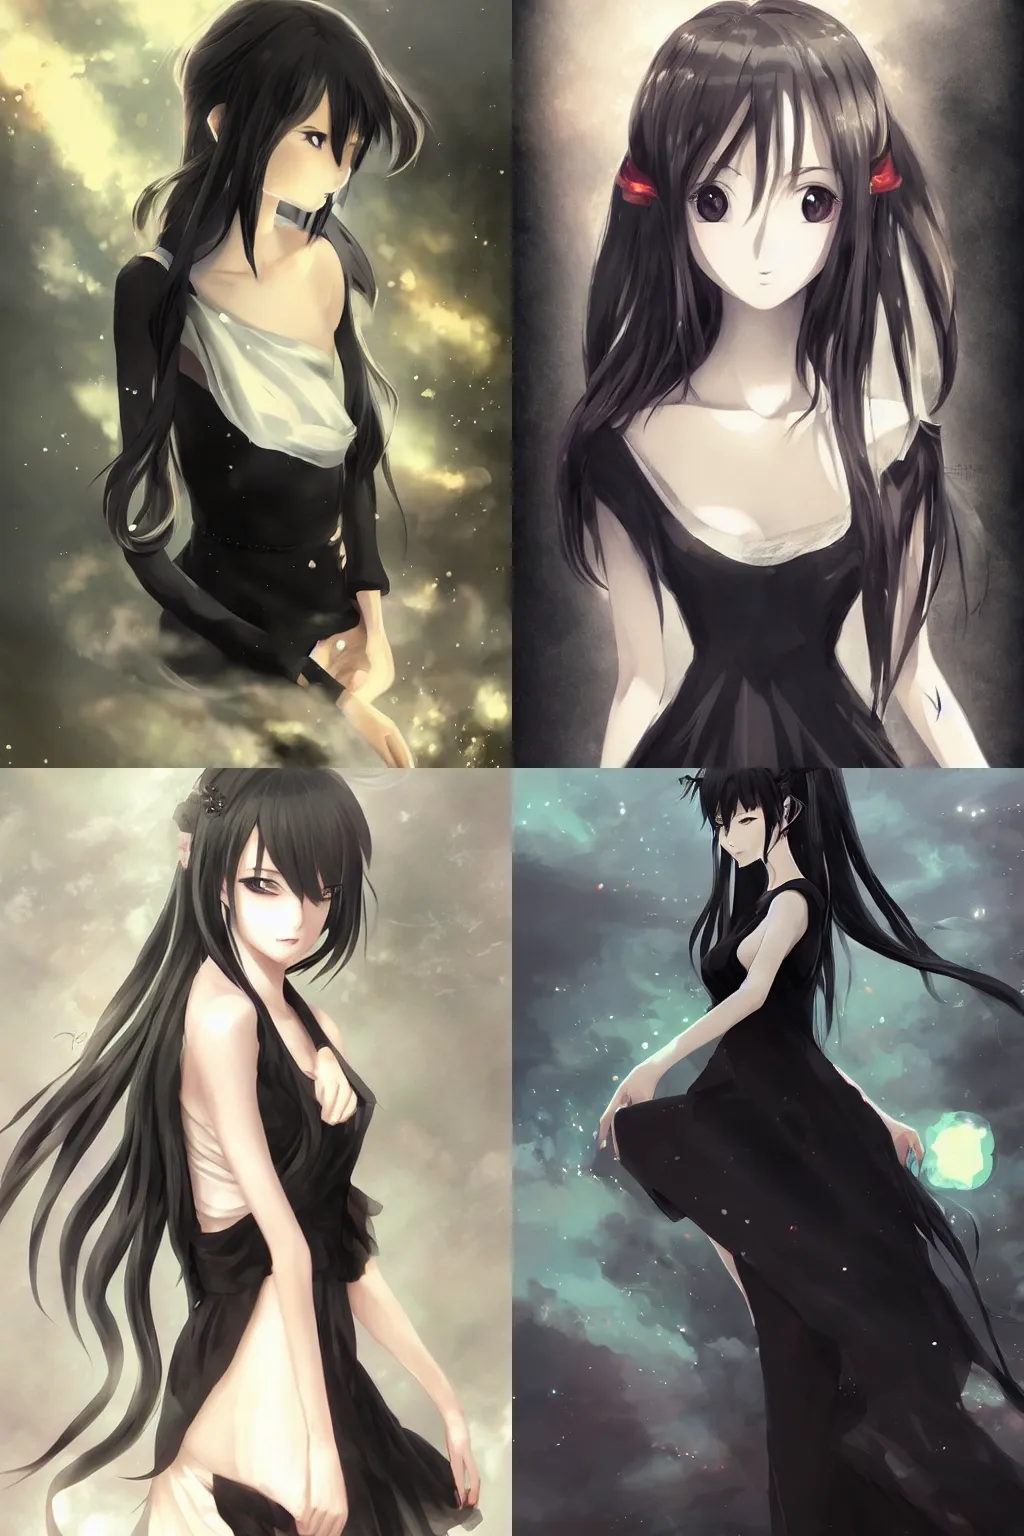 Prompt: anime girl wearing a black dress, anime style, fantasy art by makoto shinkai, by wenjun lin, digital drawing, gorgeous face, detailed body